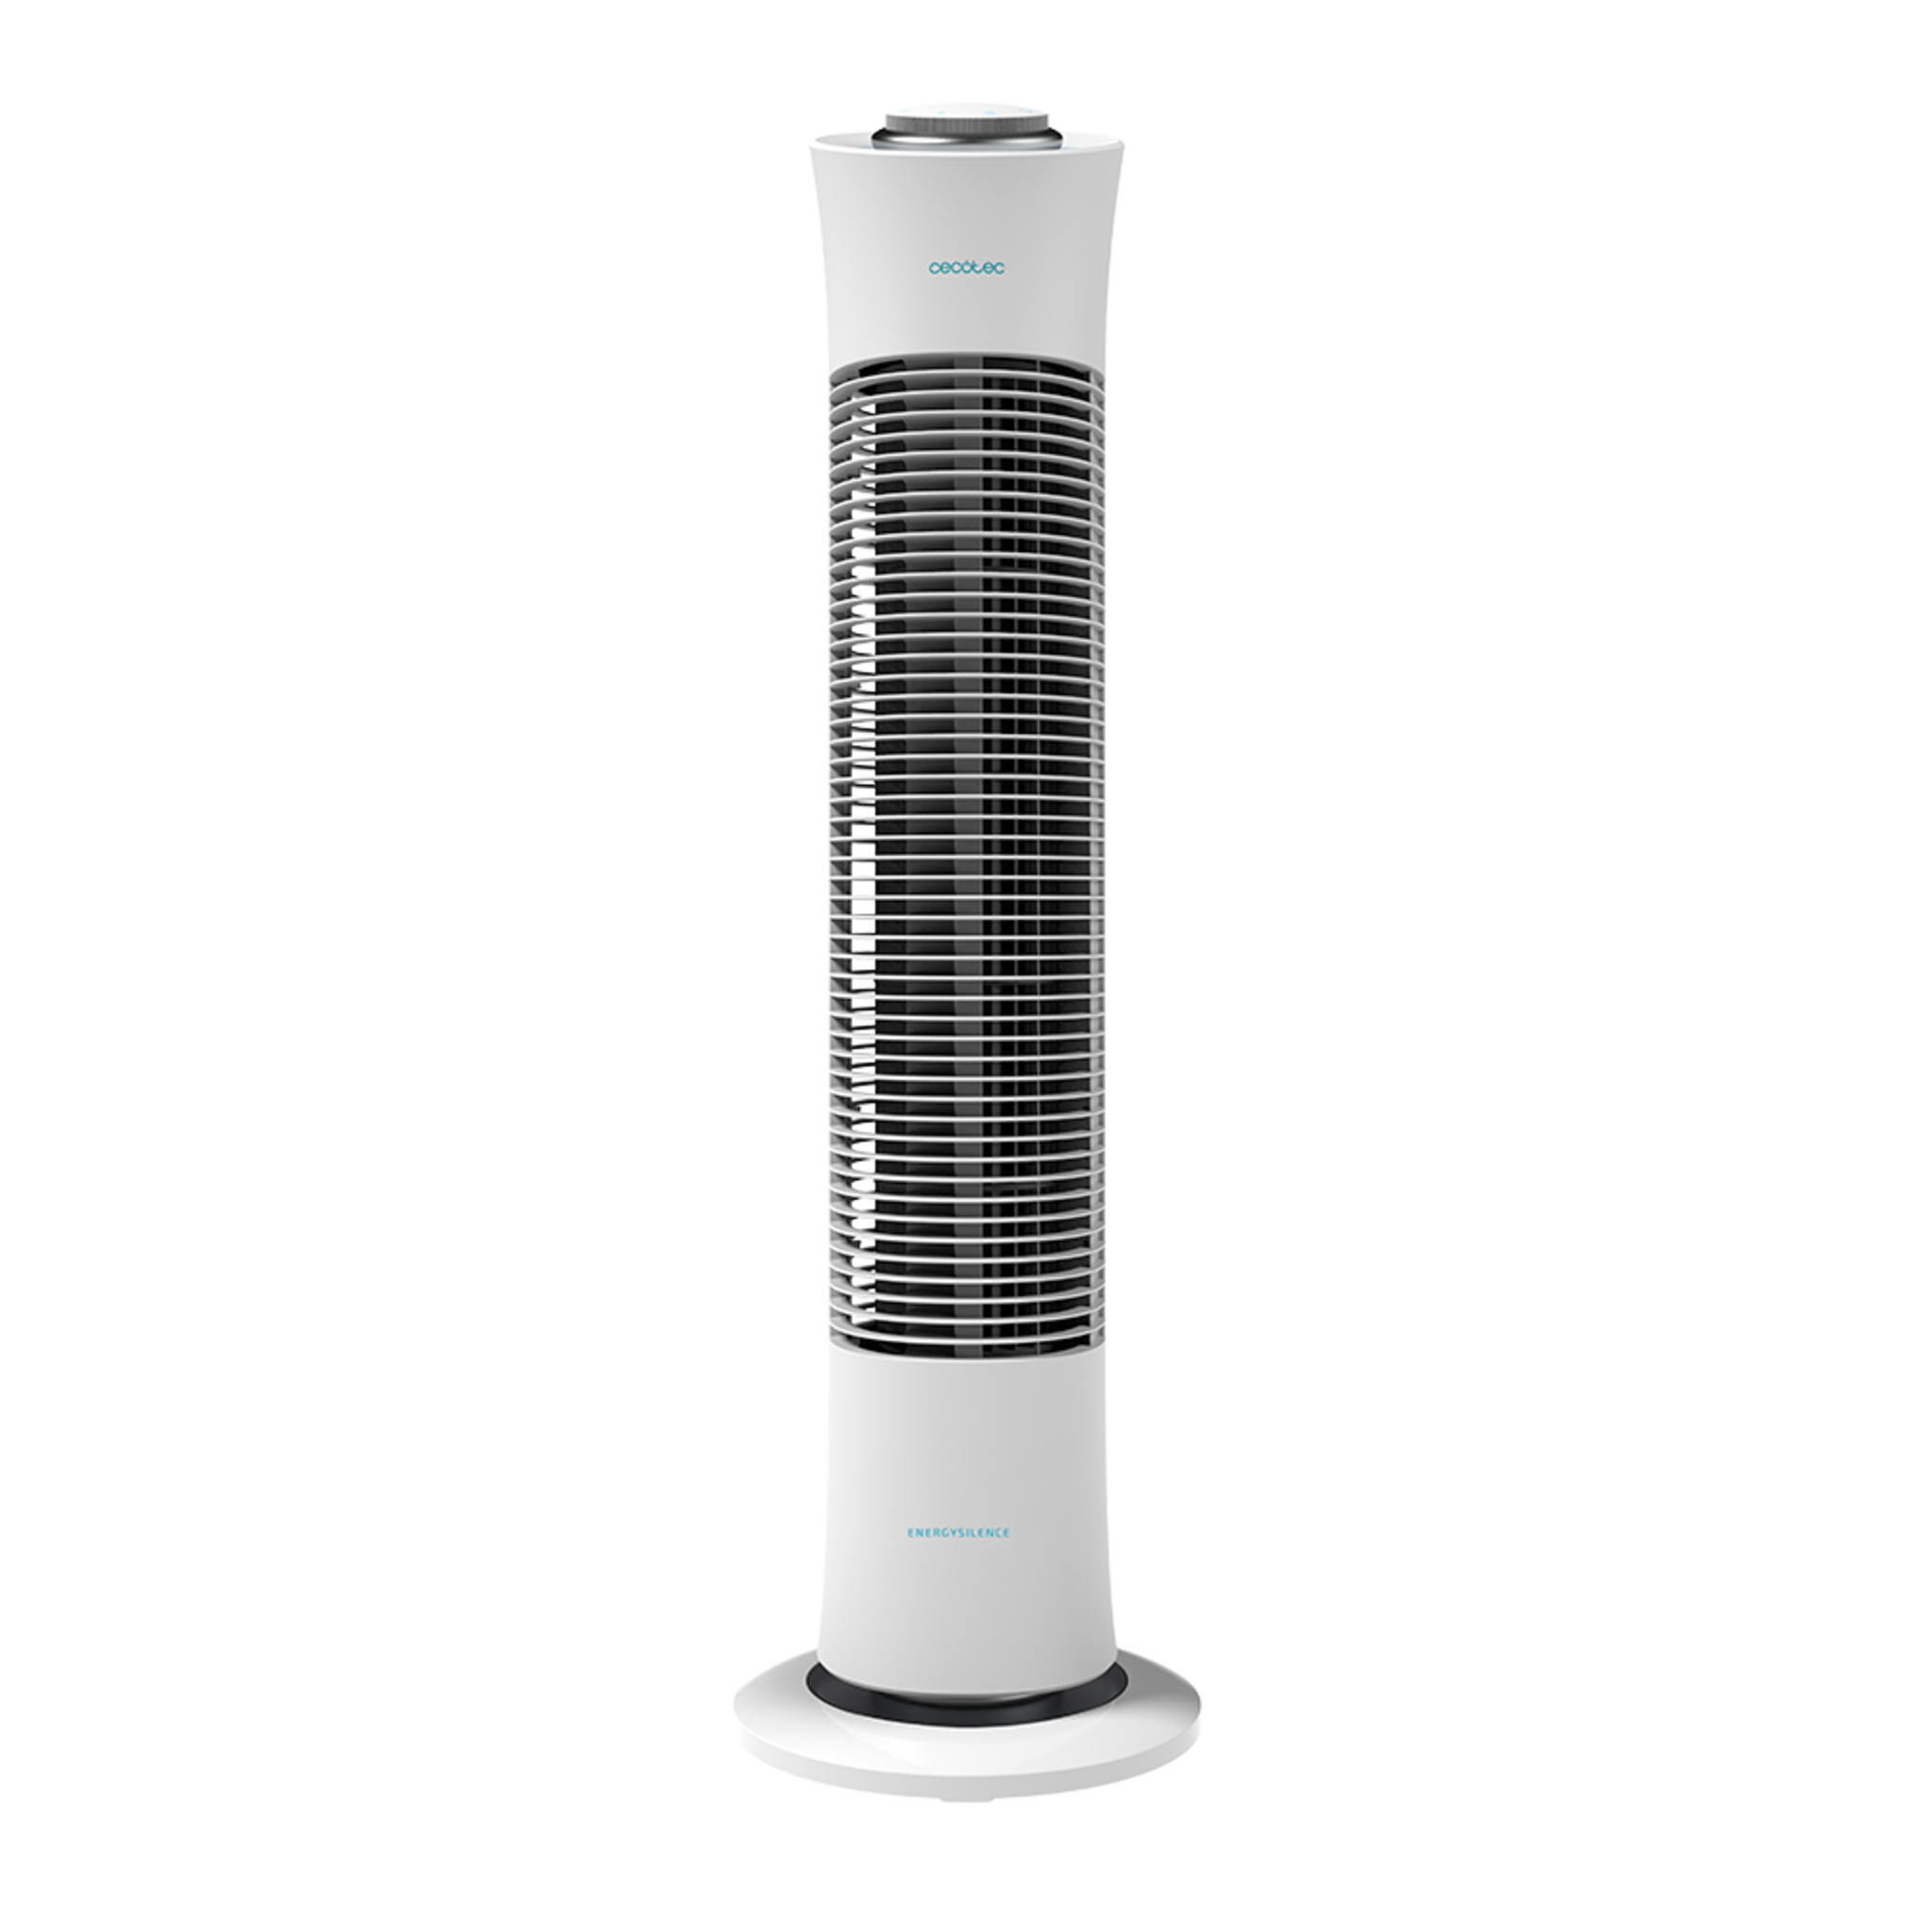 Ventilateur colonne EnergySilence 6090 Skyline. 30" (76 cm) de hauteur